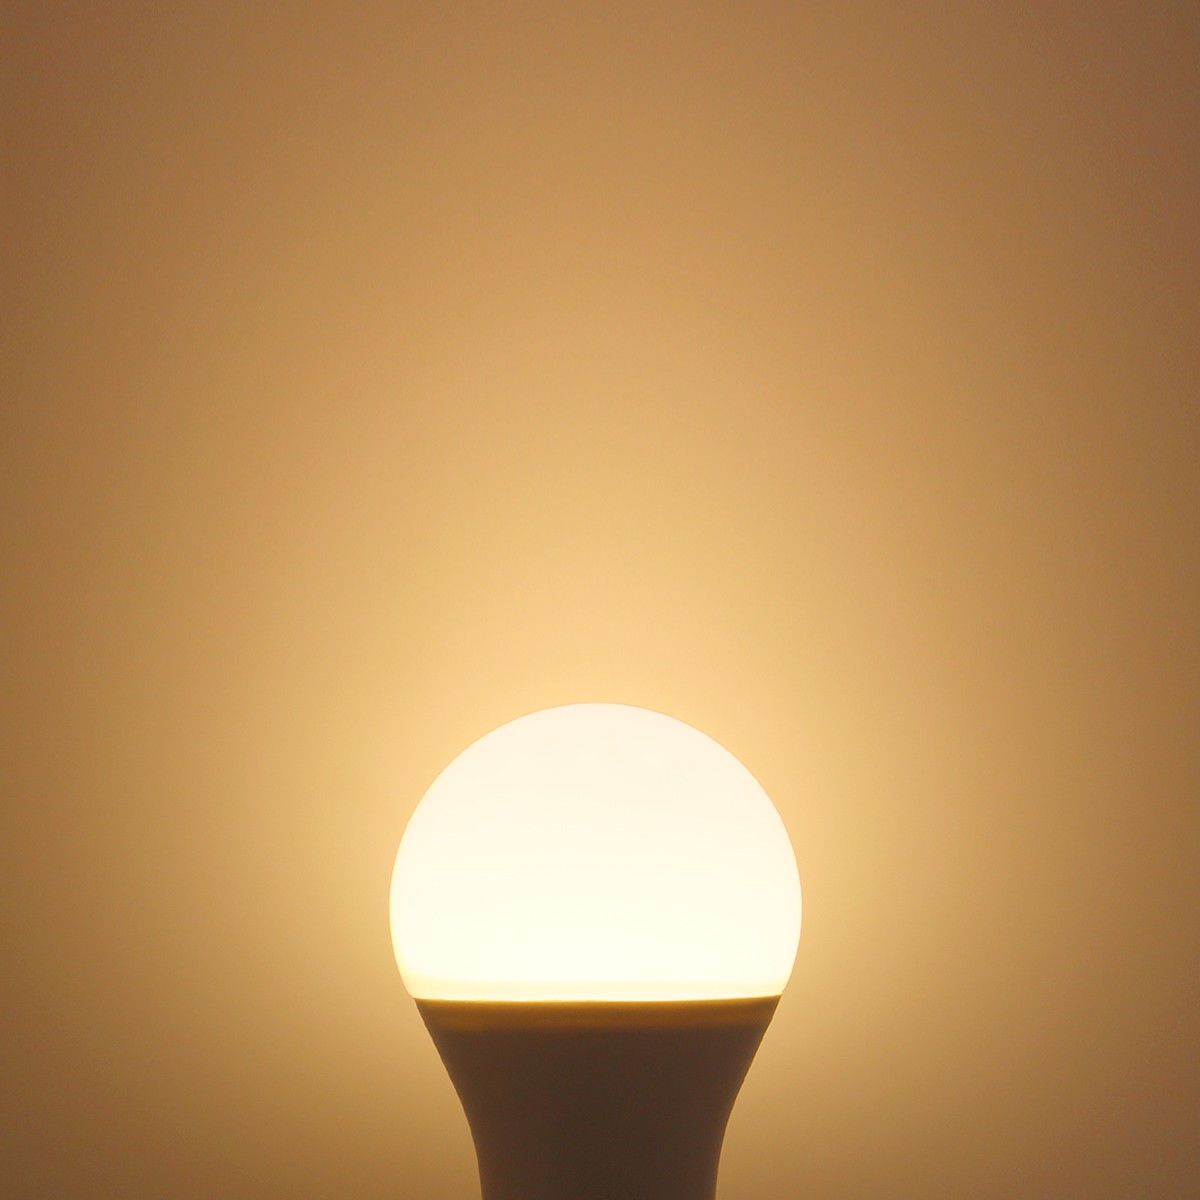 G.W.S LED Wholesale LED Bulbs B22 / 9W / Warm White (3200K) B22 Bayonet LED Globe Light Bulb